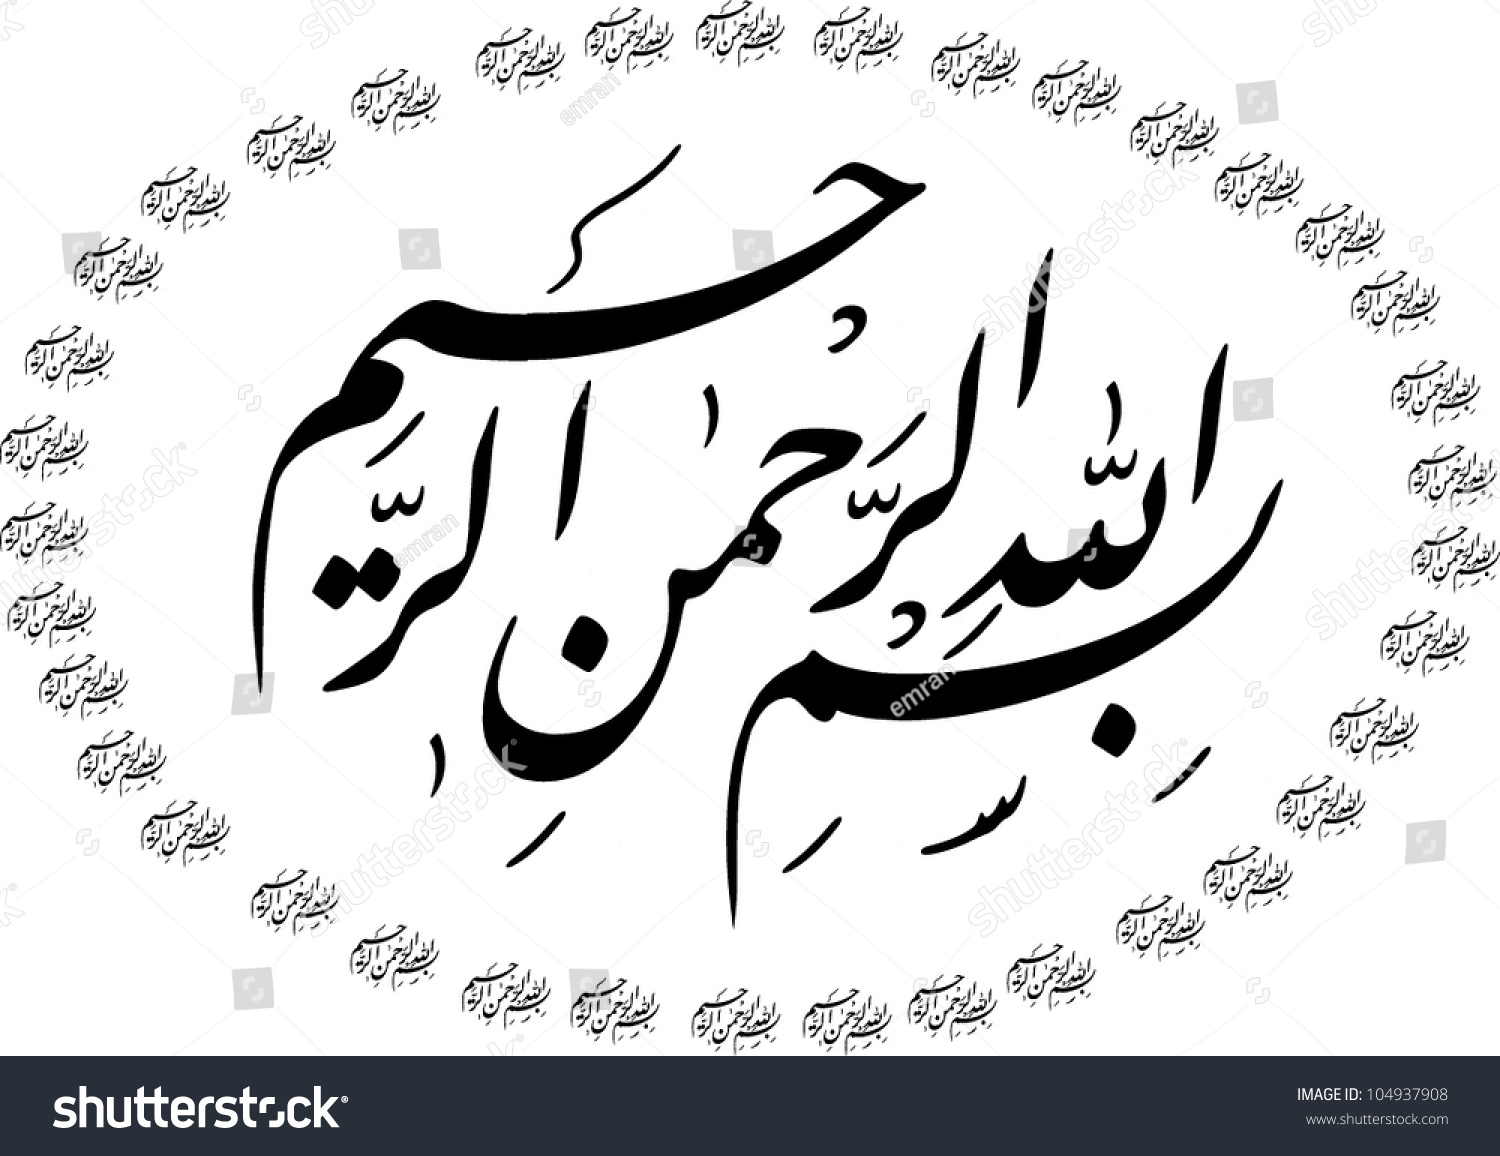 How To Write Bismillah In Arabic In Microsoft Word